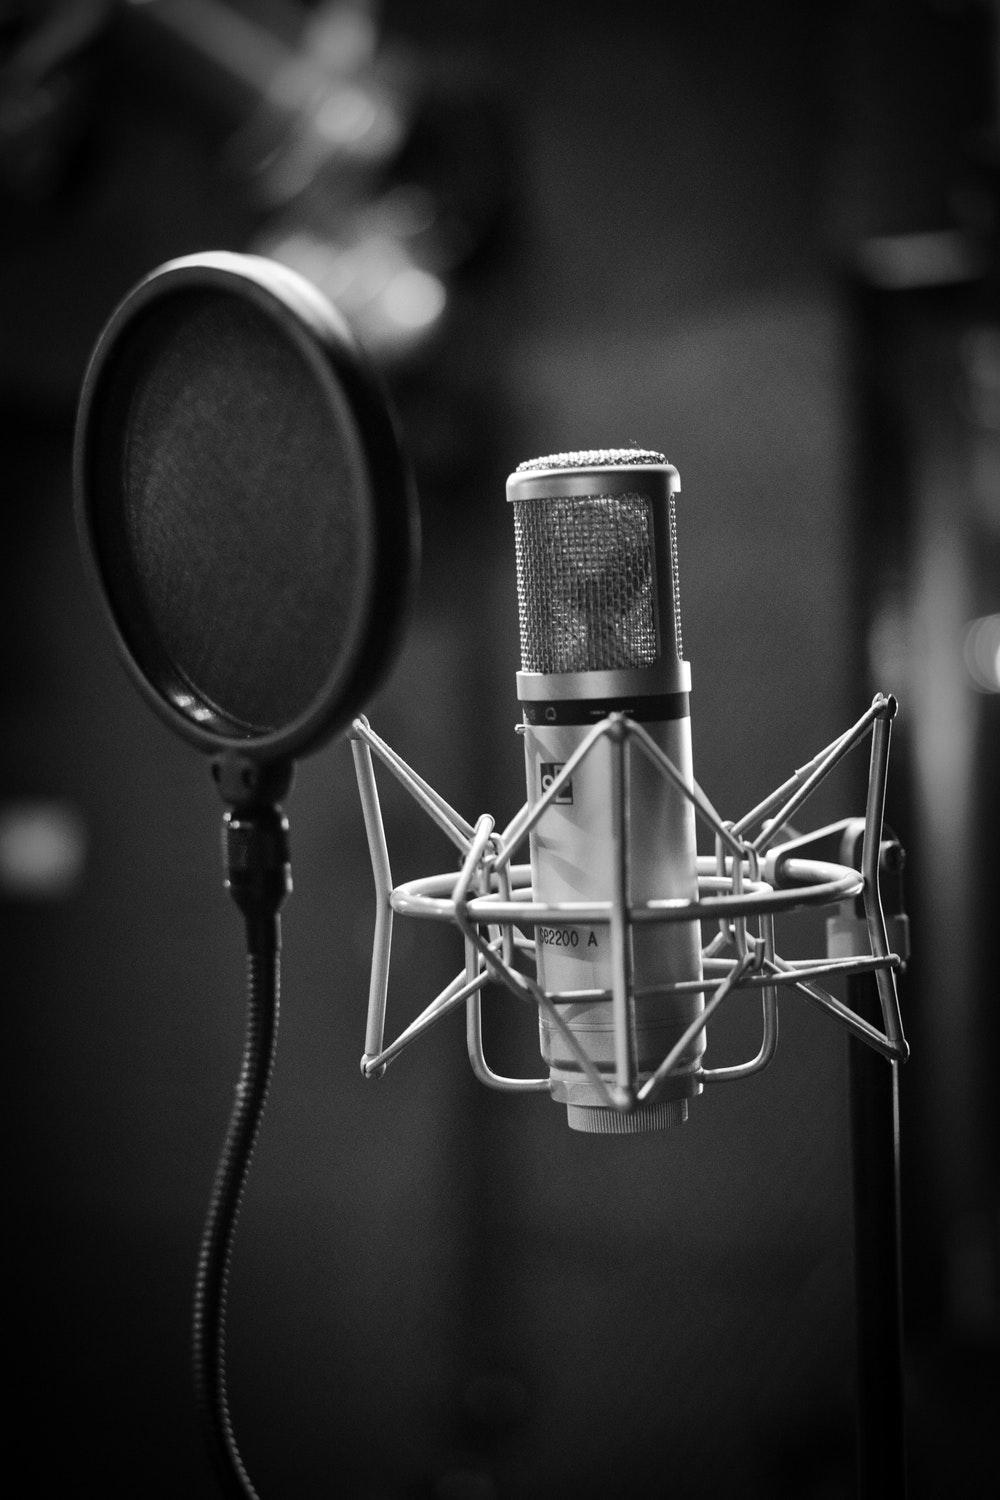 Recording Studio Picture. Download Free Image